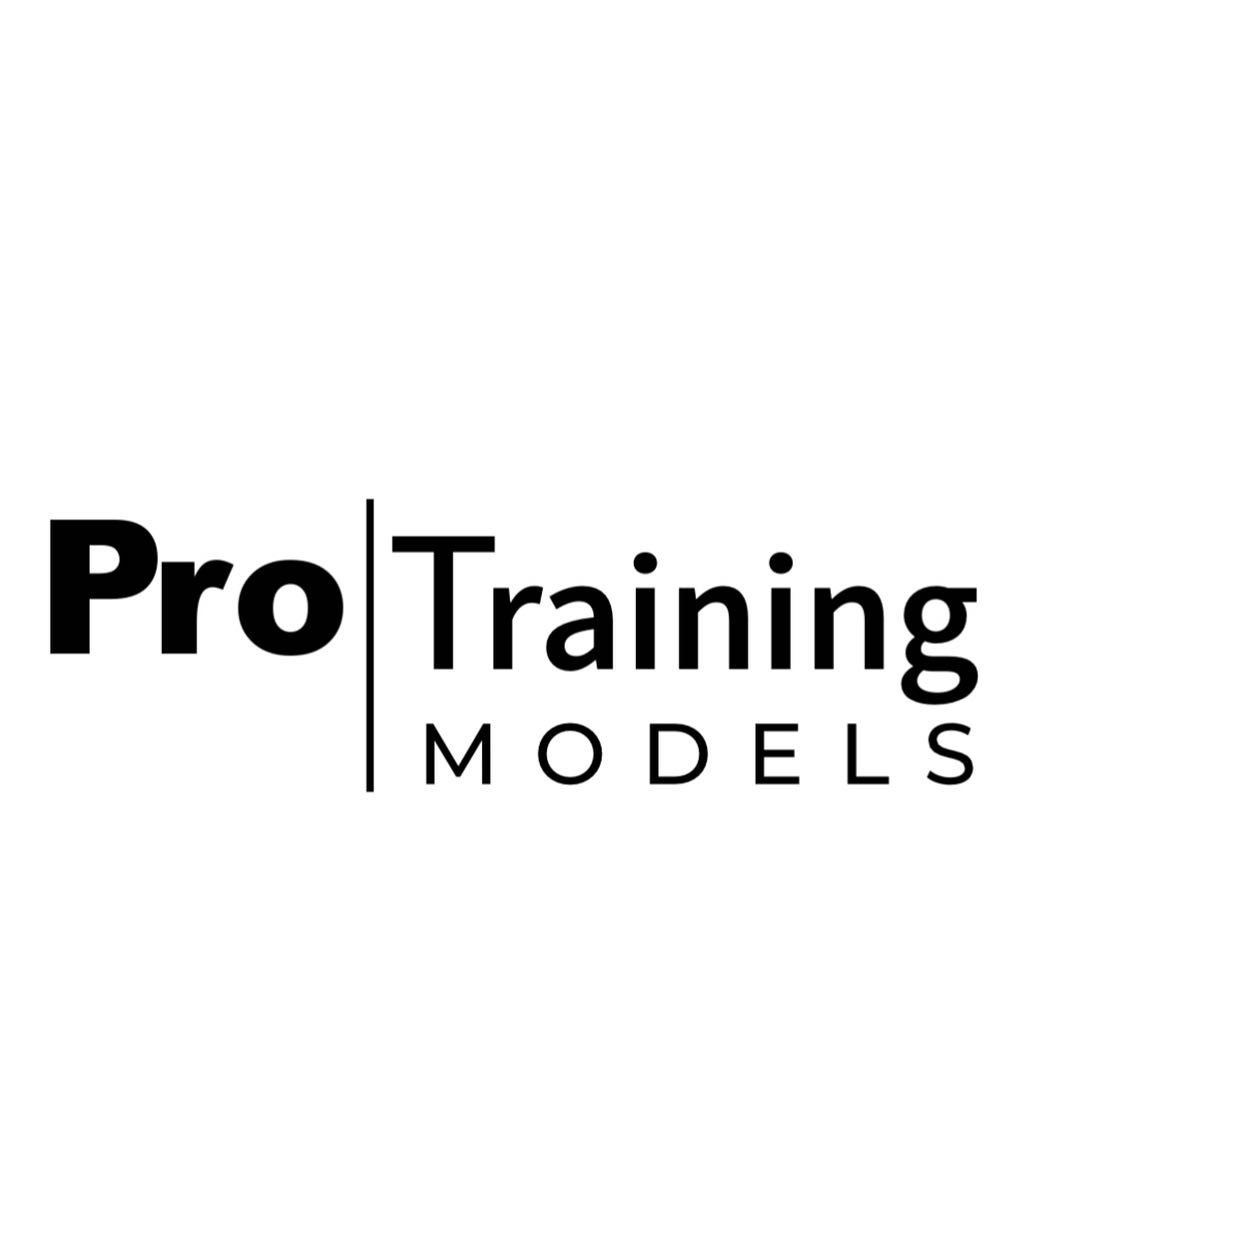 Pro training 